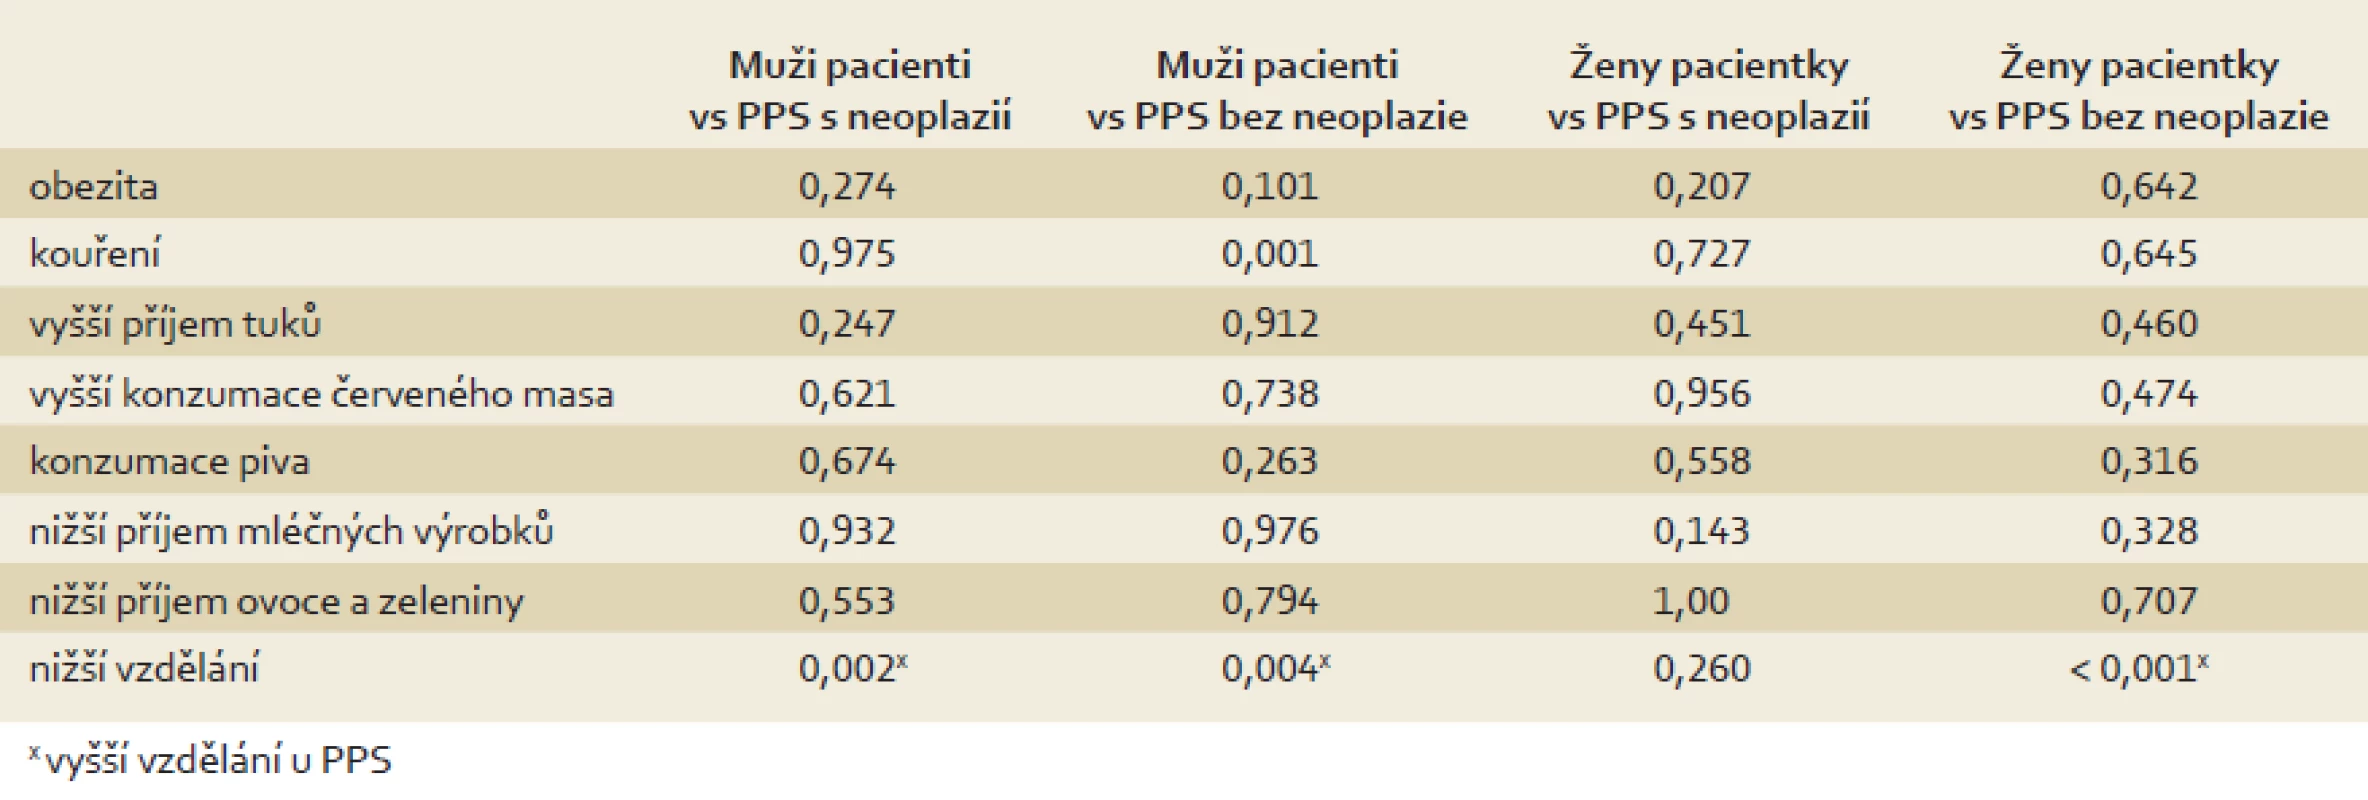 Porovnání dietních návyků pacientů s KRN a PPS s/bez neoplazie (χ&lt;sup&gt;2&lt;/sup&gt;/ Fisherův exaktní test).
Tab. 2. Comparison of dietary habits between colorectal neoplasia patients and first-degree relatives with/without neoplasia (χ&lt;sup&gt;2&lt;/sup&gt;/ Fisher’s exact test).